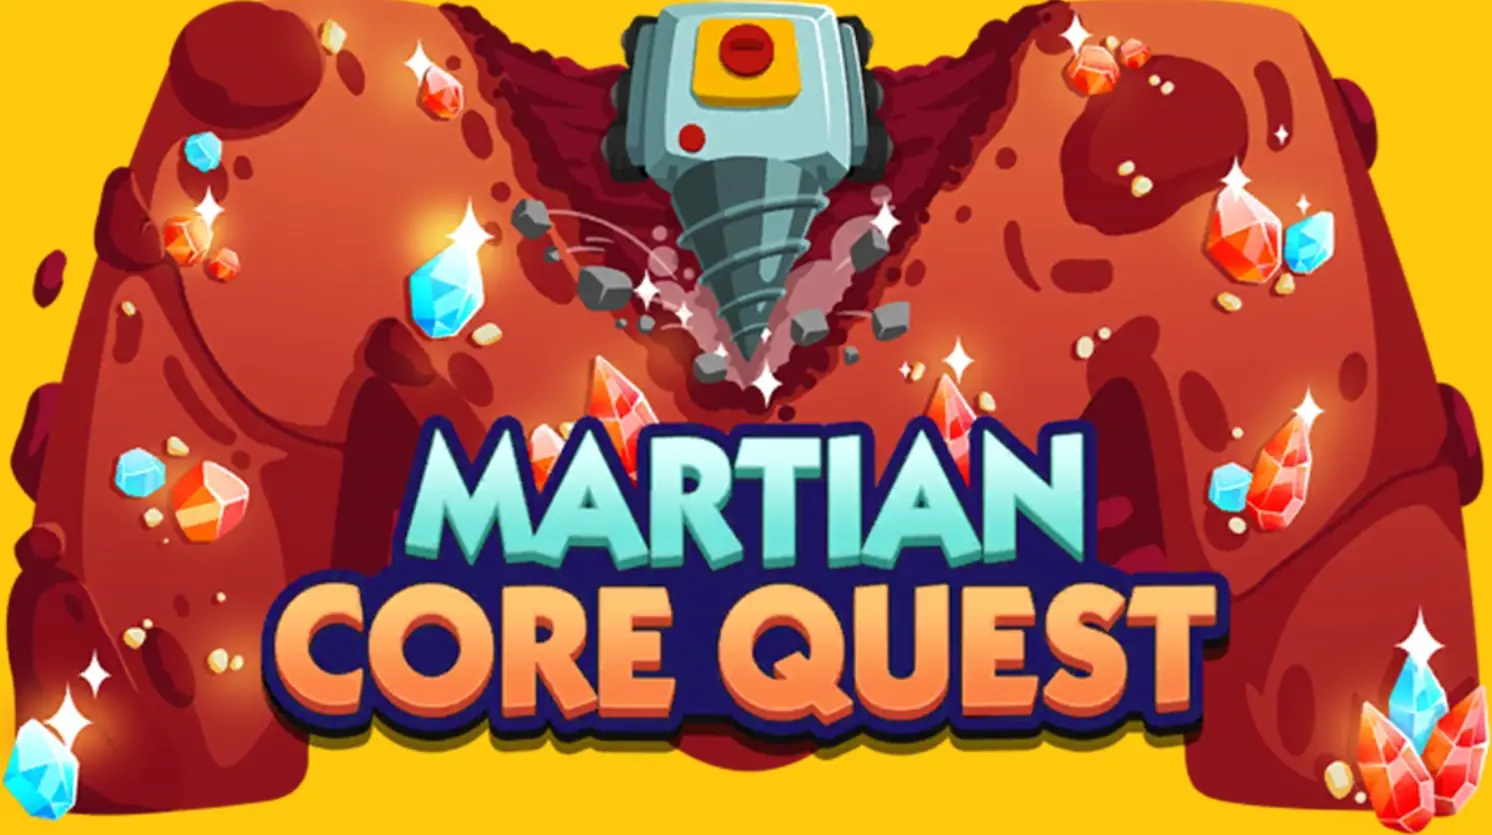 monopoly go martian core quest rewards and milestones